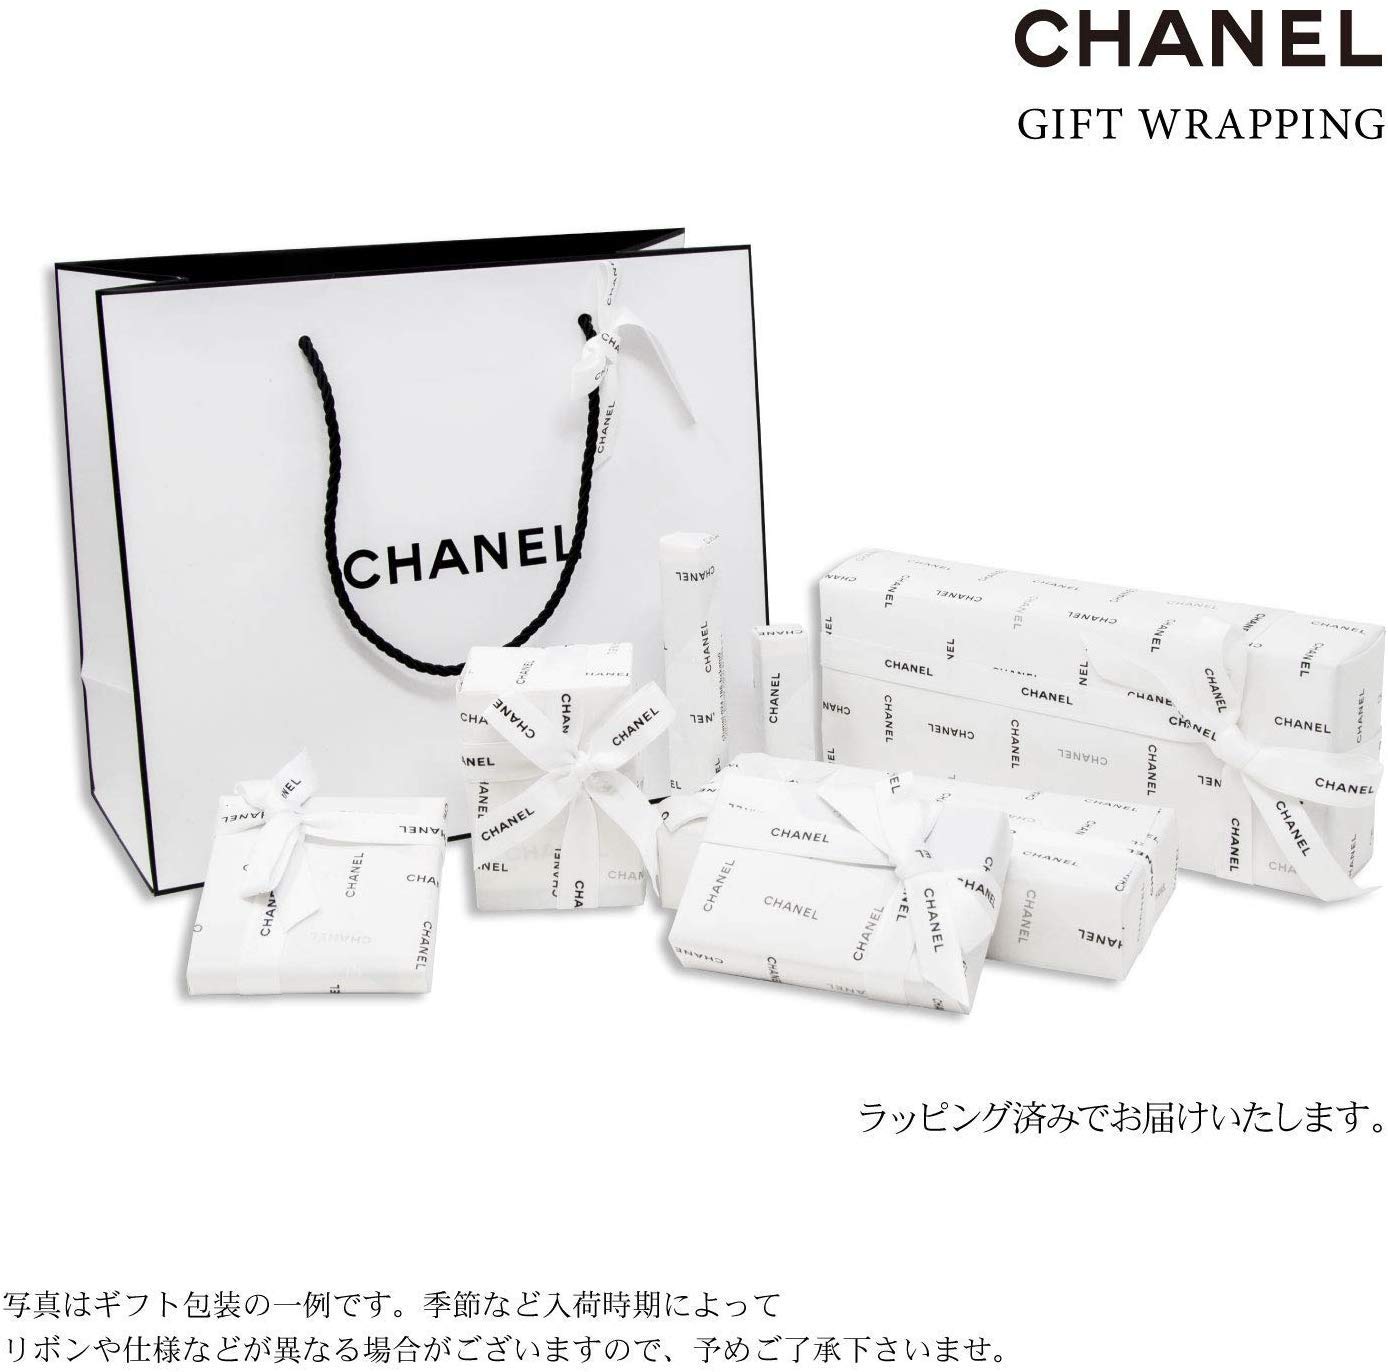 Buy Chanel La Crème Main Texture Riche NourishProtectBrighten 50 ml  Medi Life Pharmacy